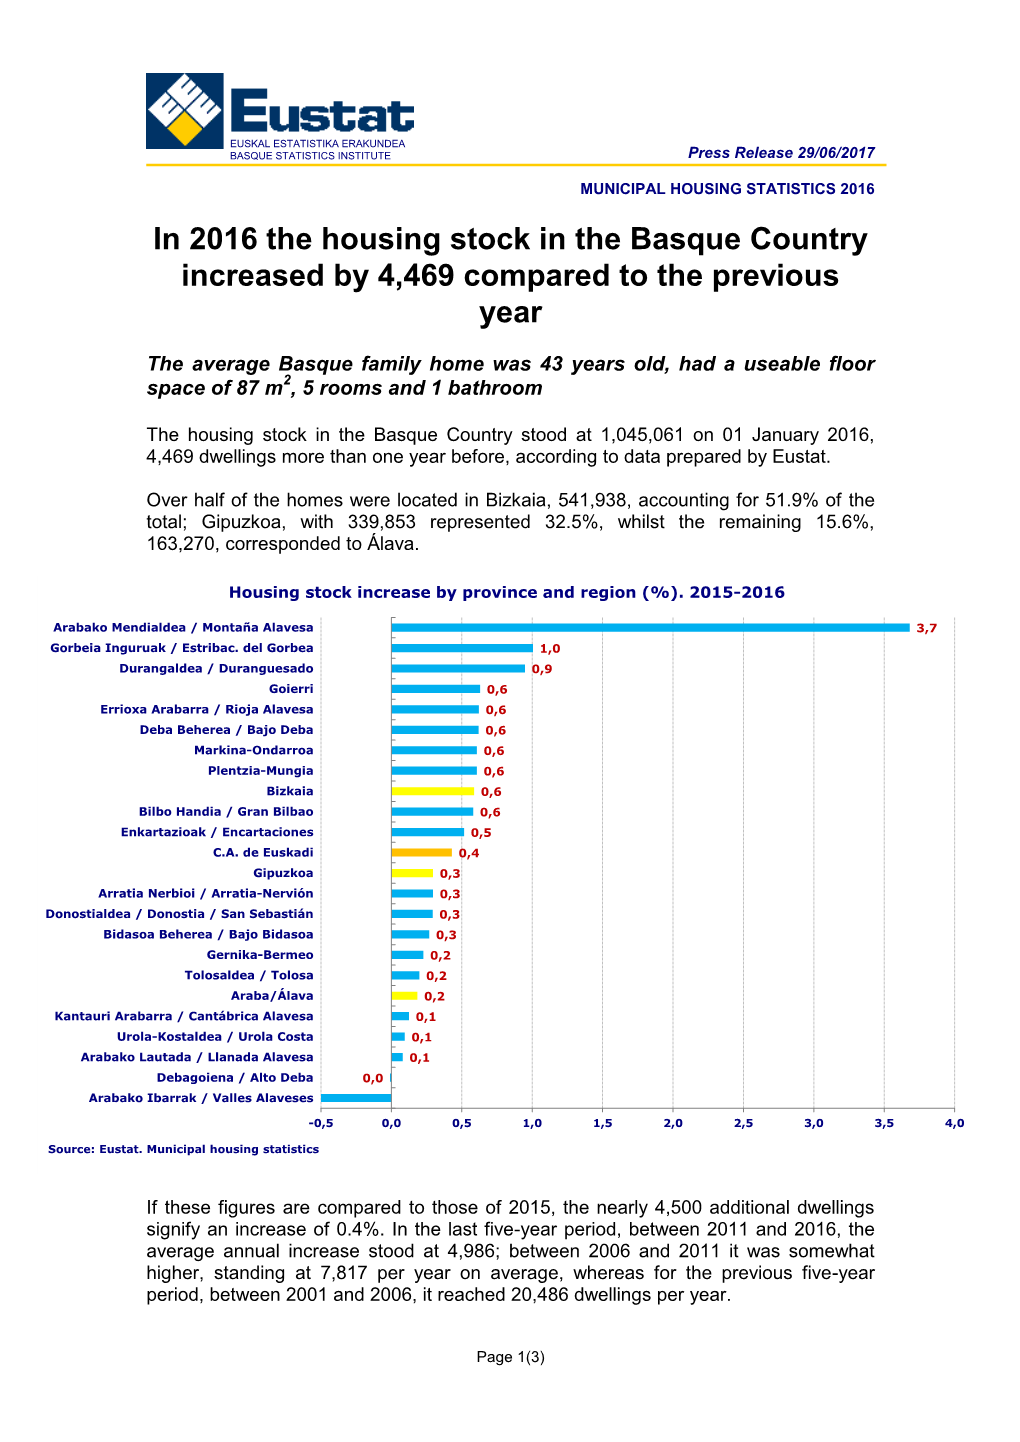 MUNICIPAL HOUSING STATISTICS 2016. in 2016 The